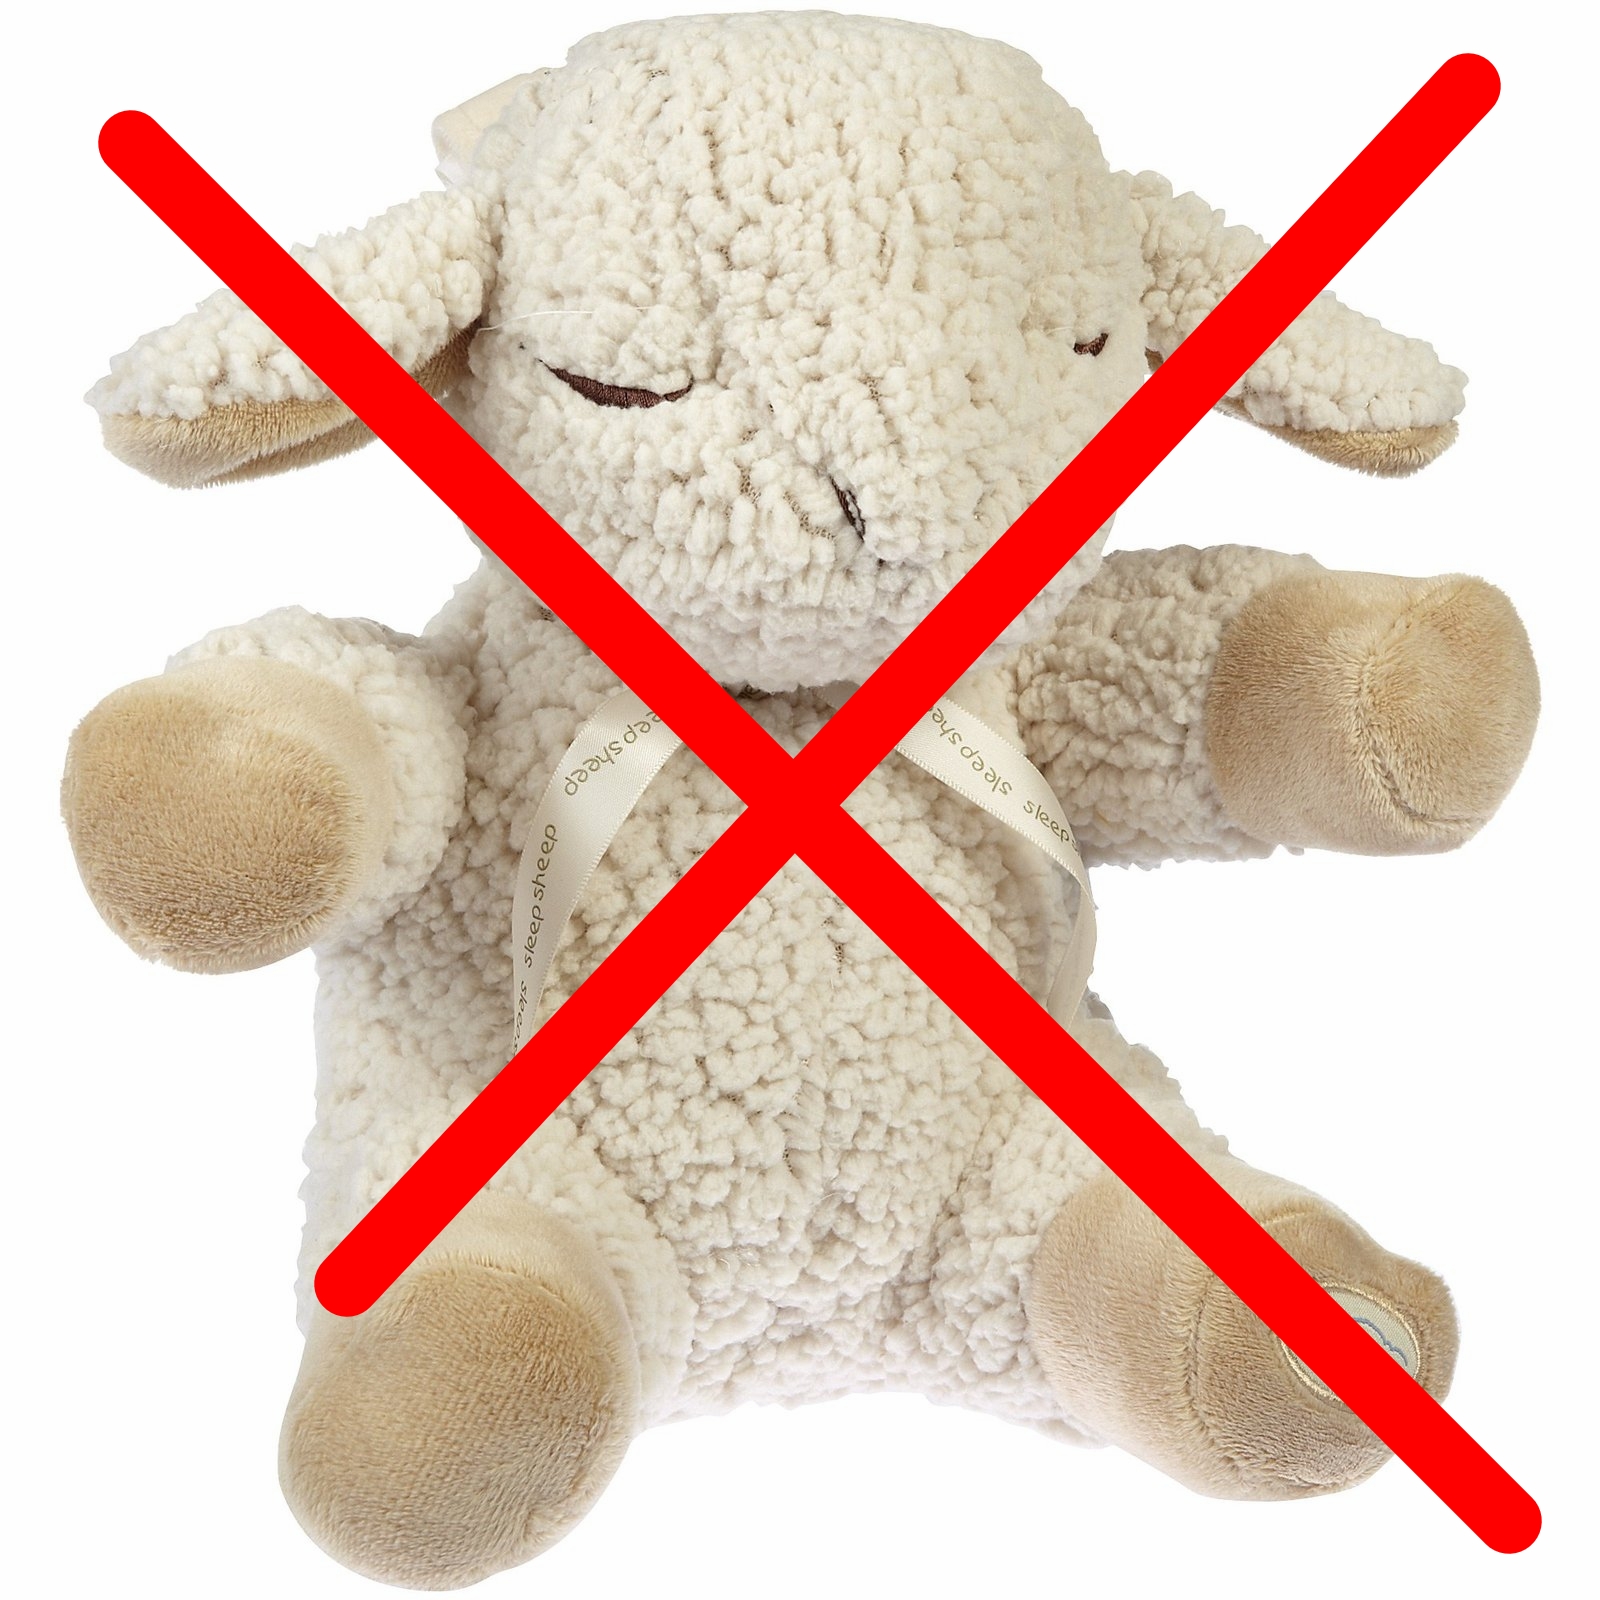 Sleep Sheep: don't do it!